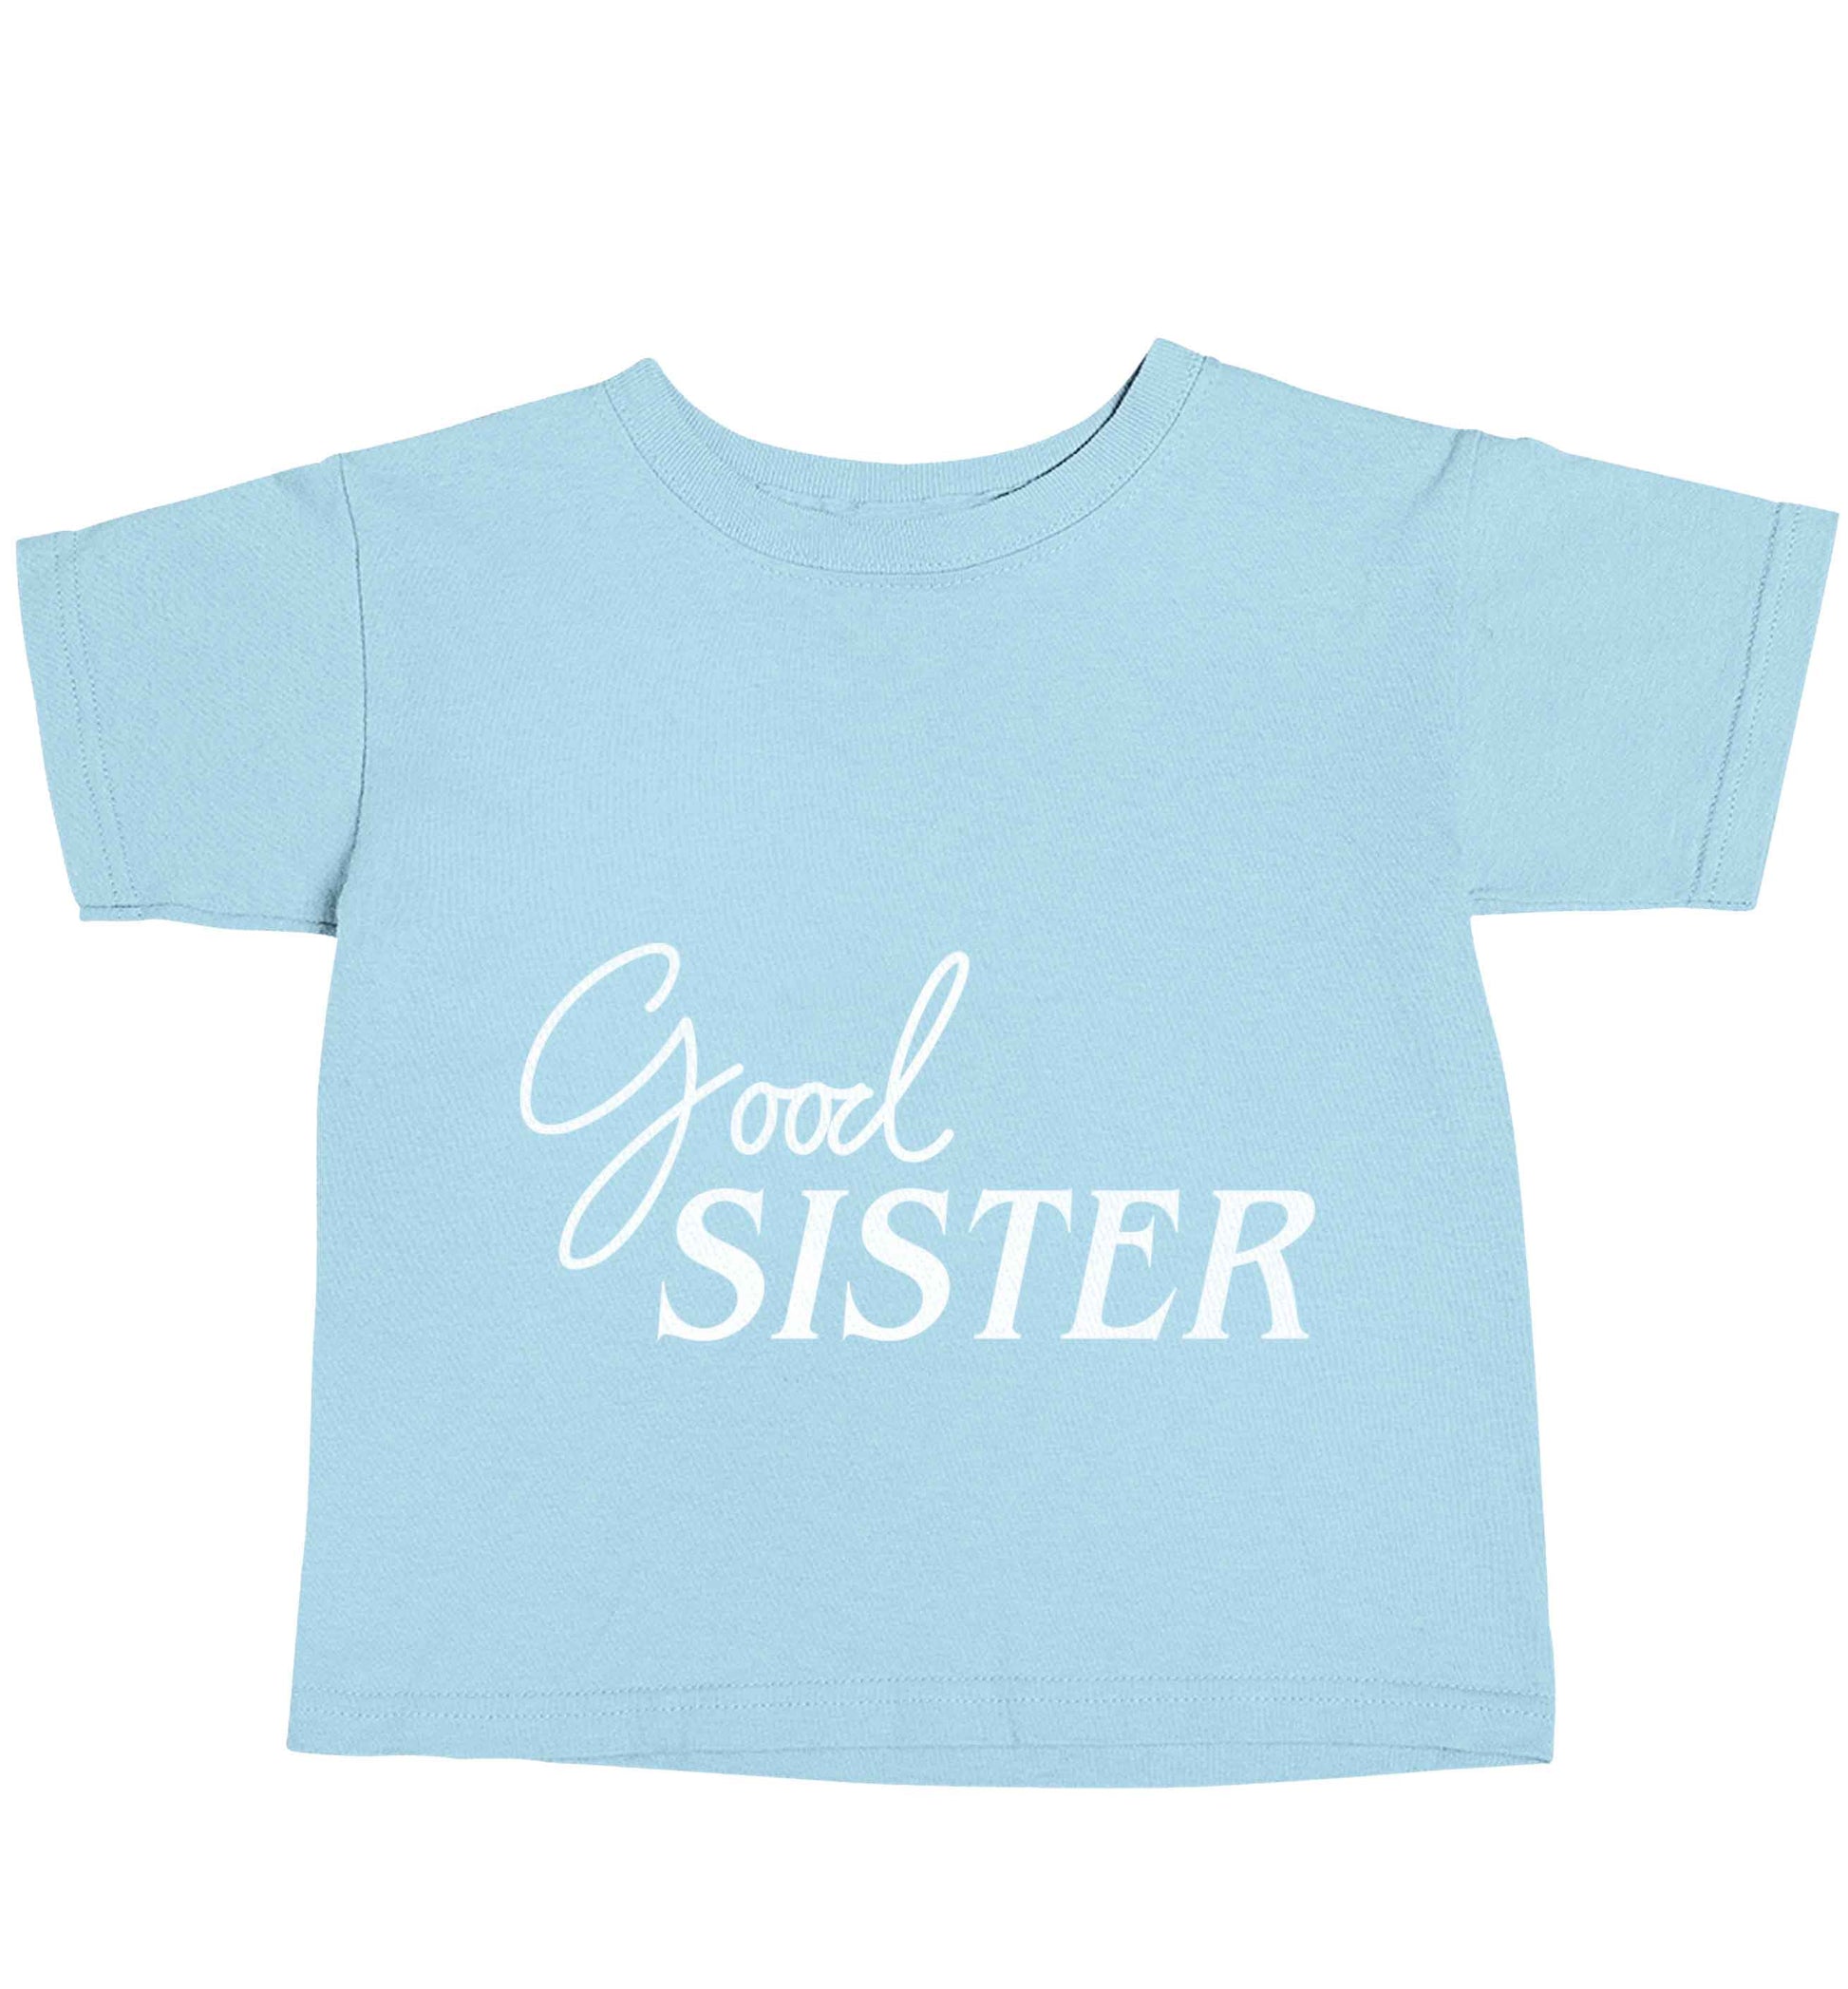 Good sister light blue baby toddler Tshirt 2 Years